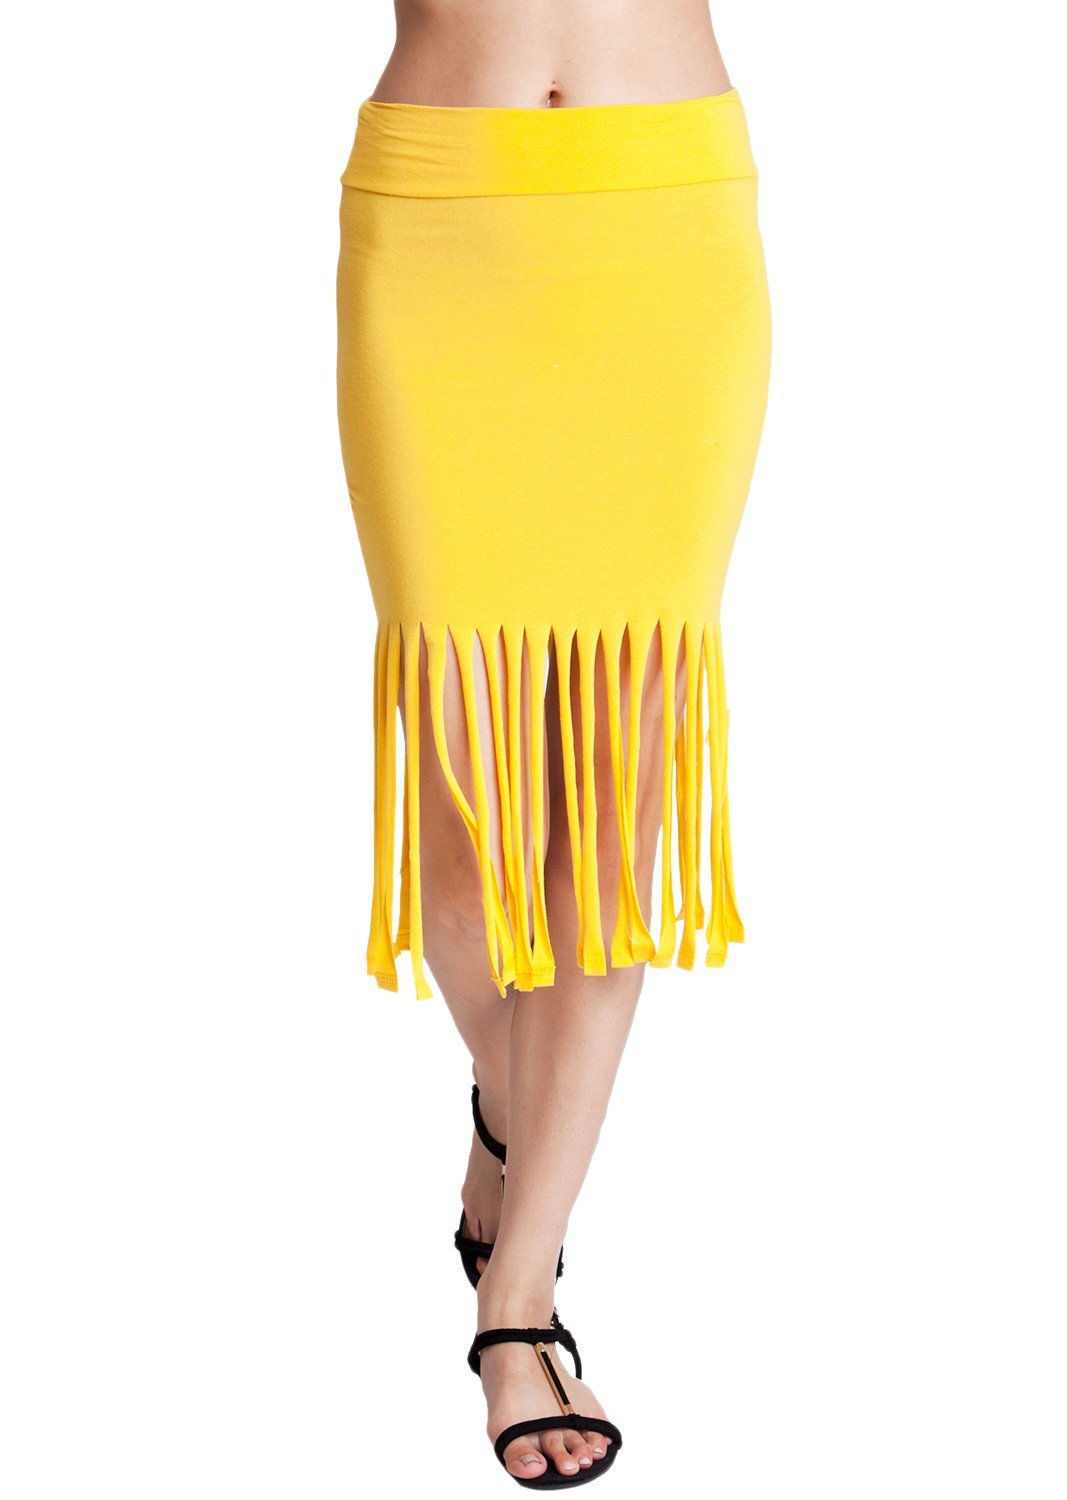 Clothes Effect  Woman Fringe Cut Pencil Skirt, Multiple Colors Available